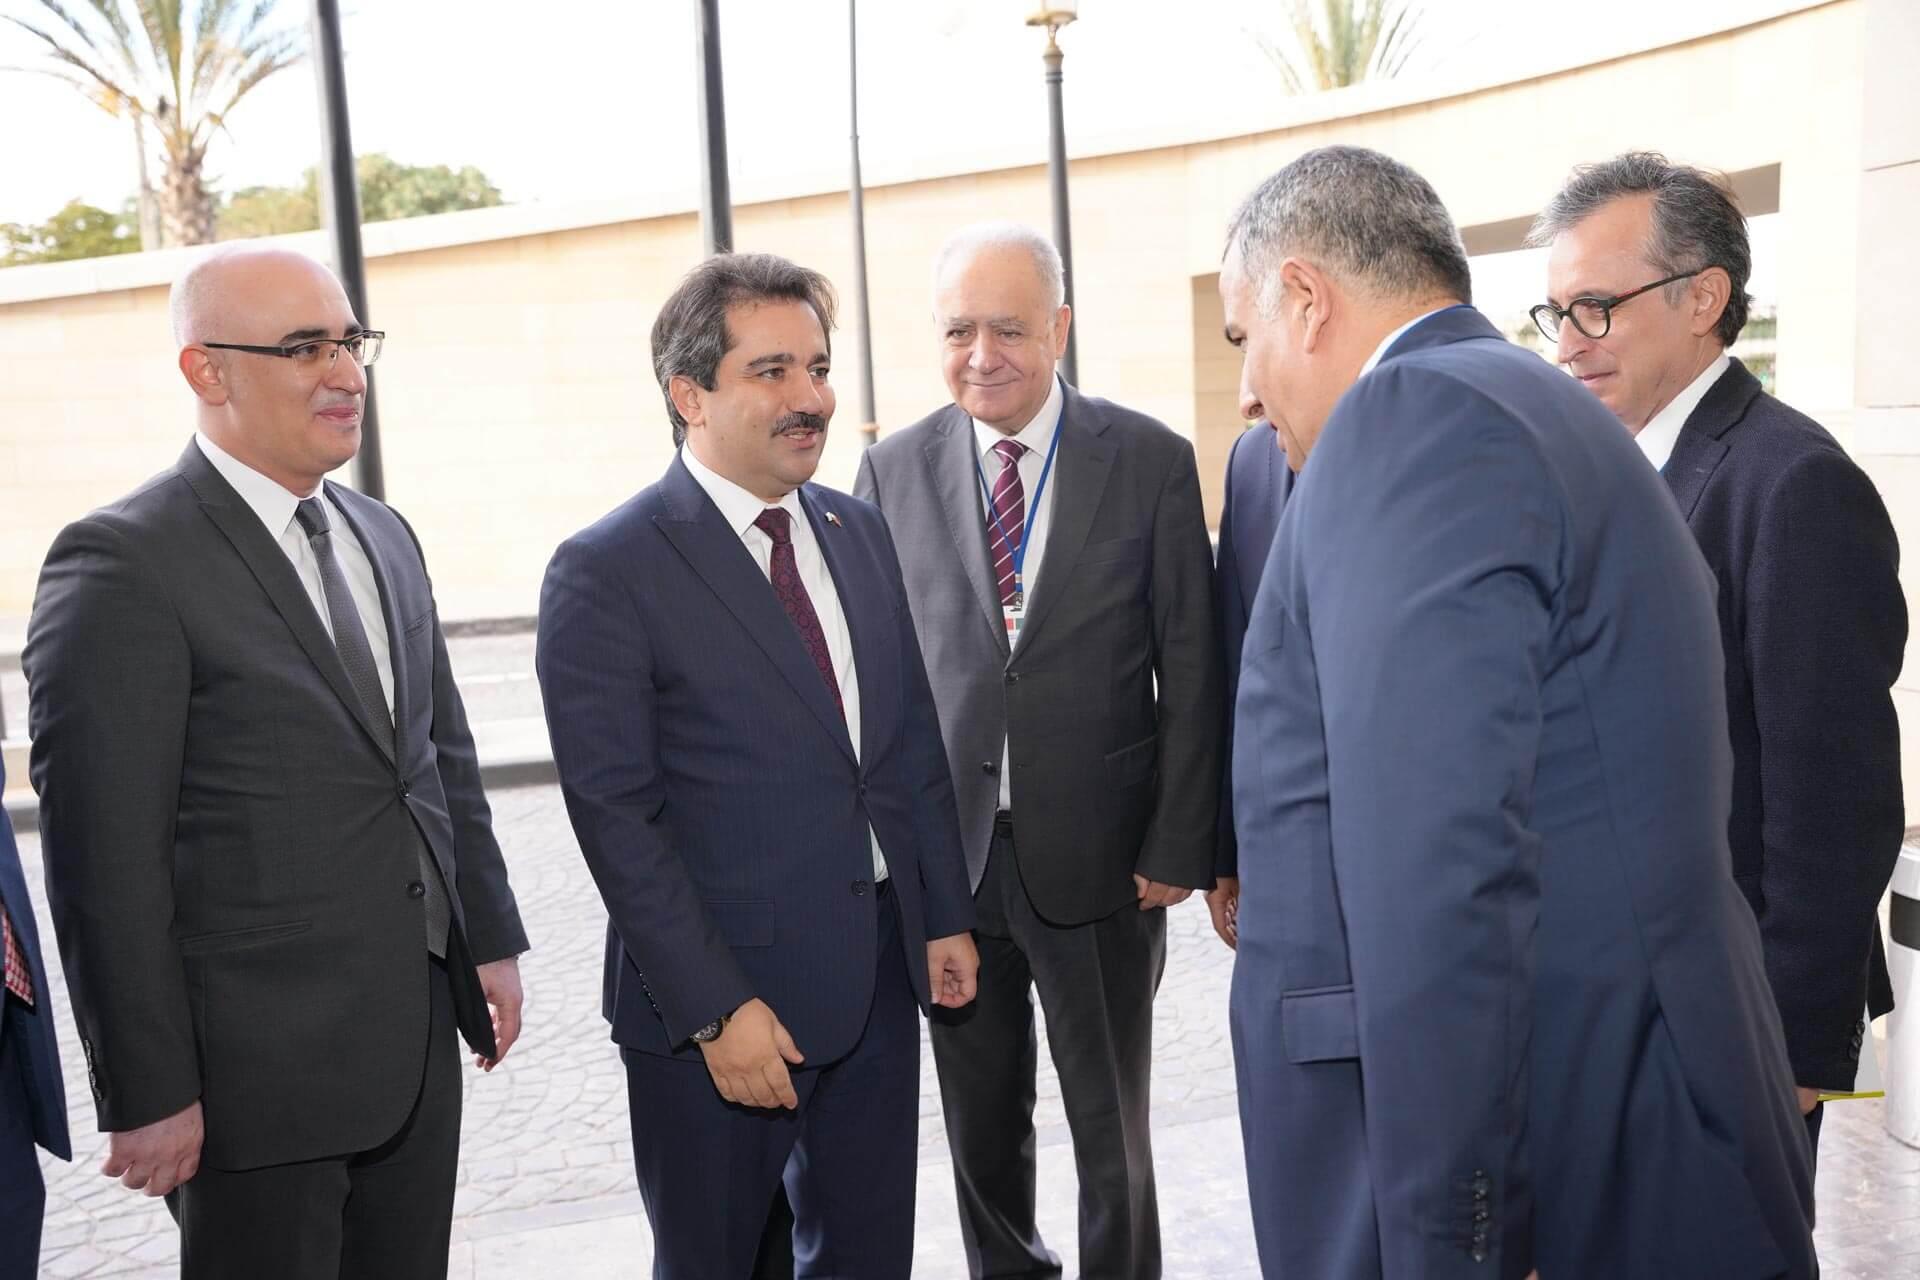 Welcome to the Meeting by our Ambassador Mr. Muhammed Mücahit Küçükyılmaz